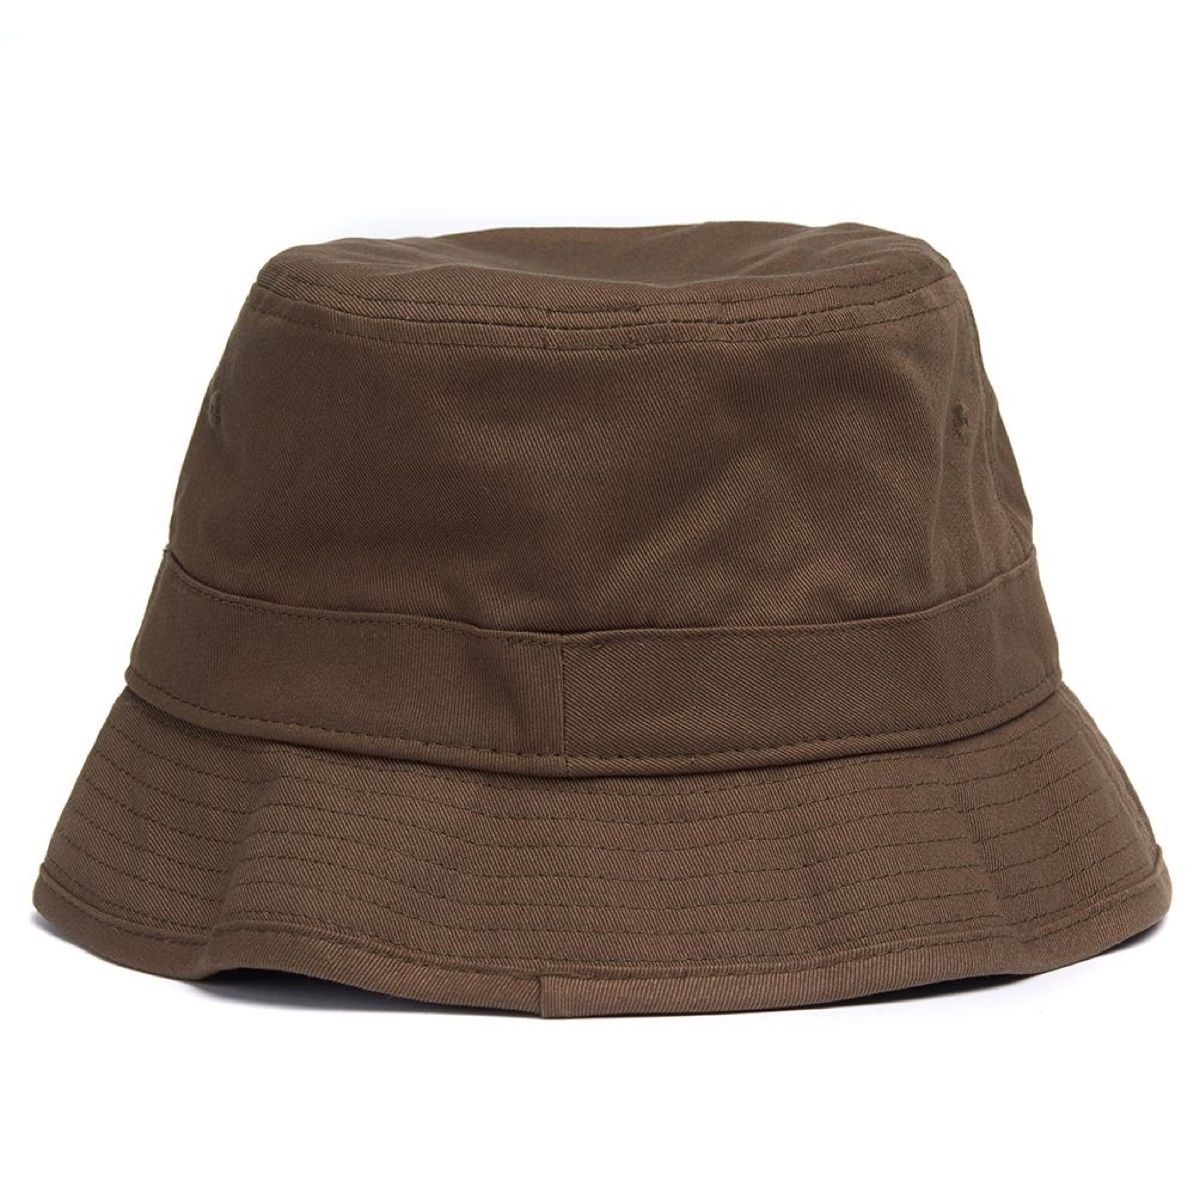 Barbour Cascade Bucket Hat | Olive